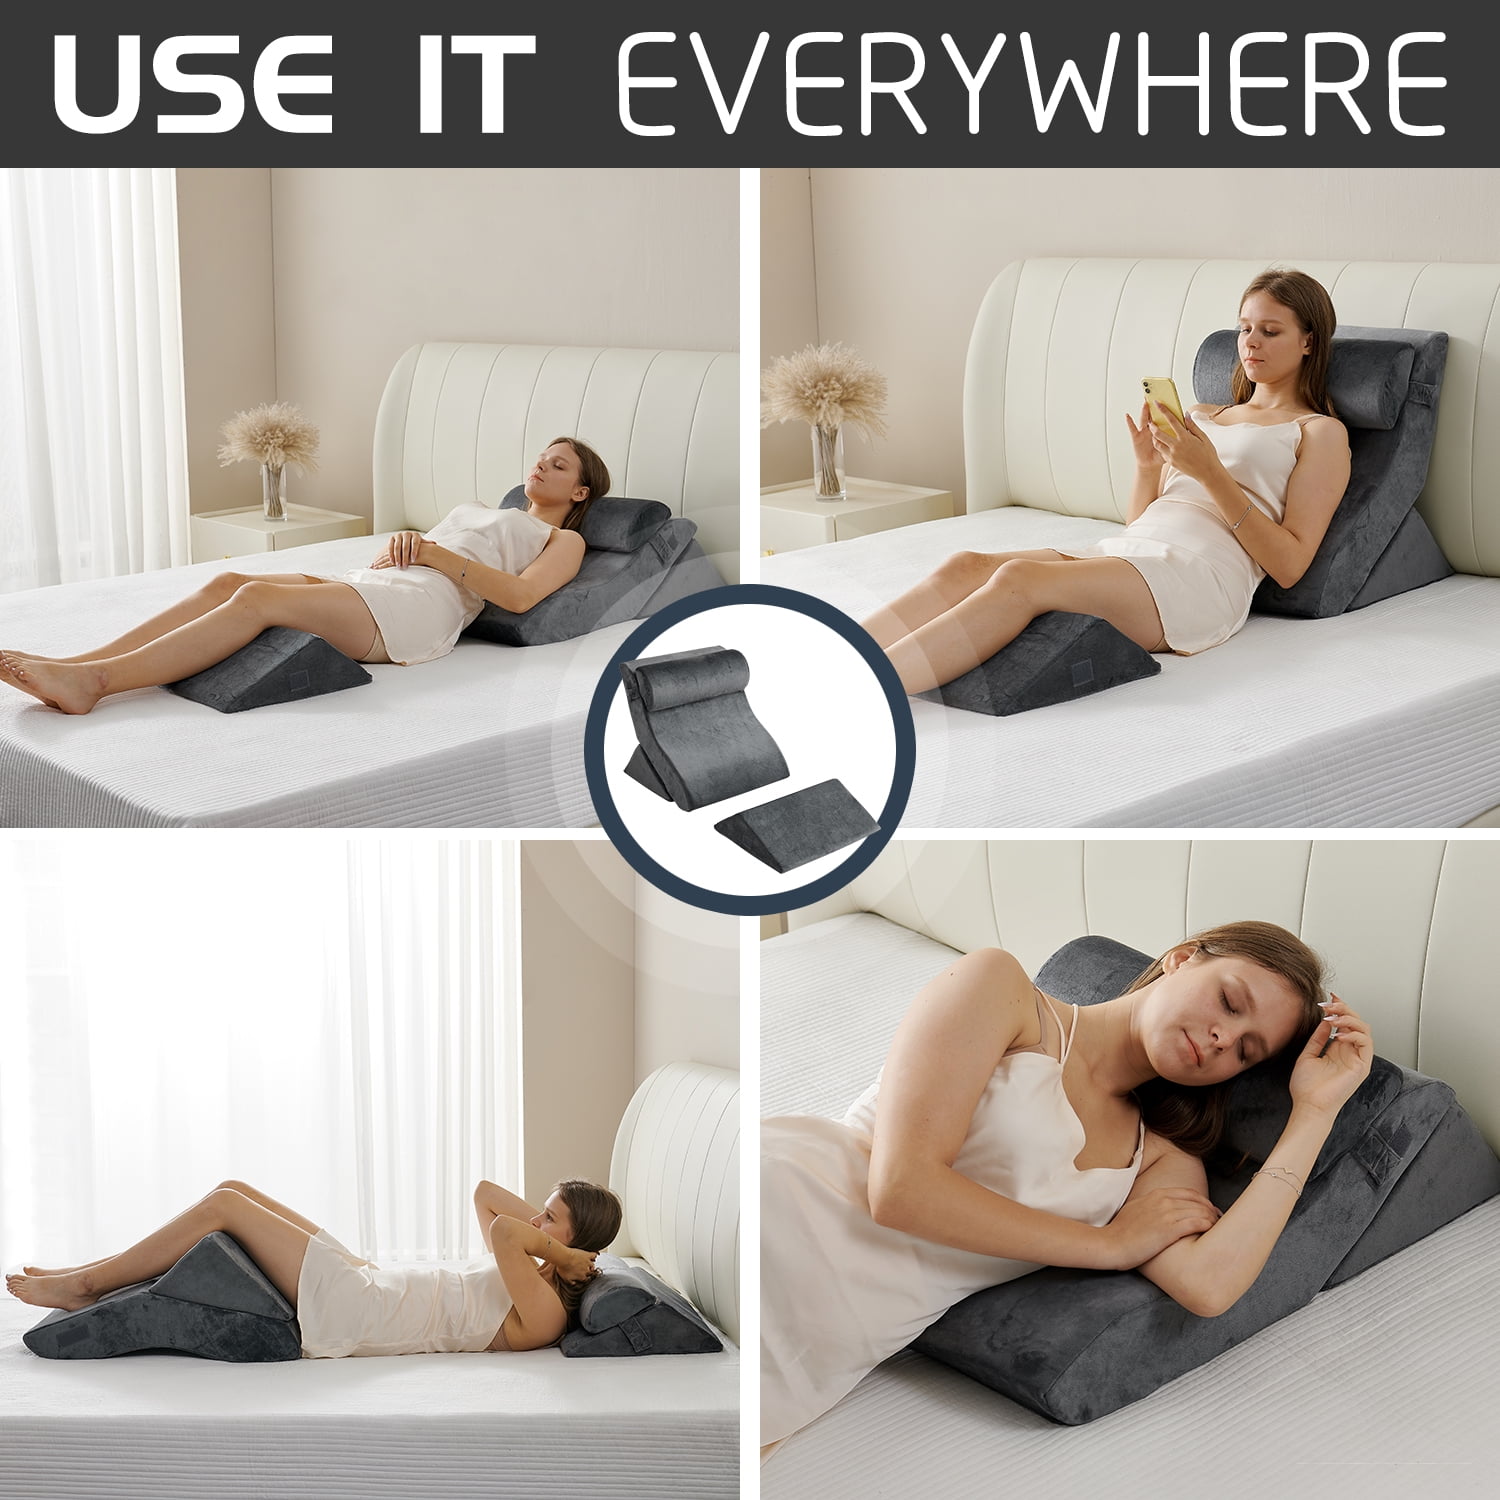 6PCS Qirroboni Orthopedic Bed Wedge Pillow Set, Adjustable Pillows